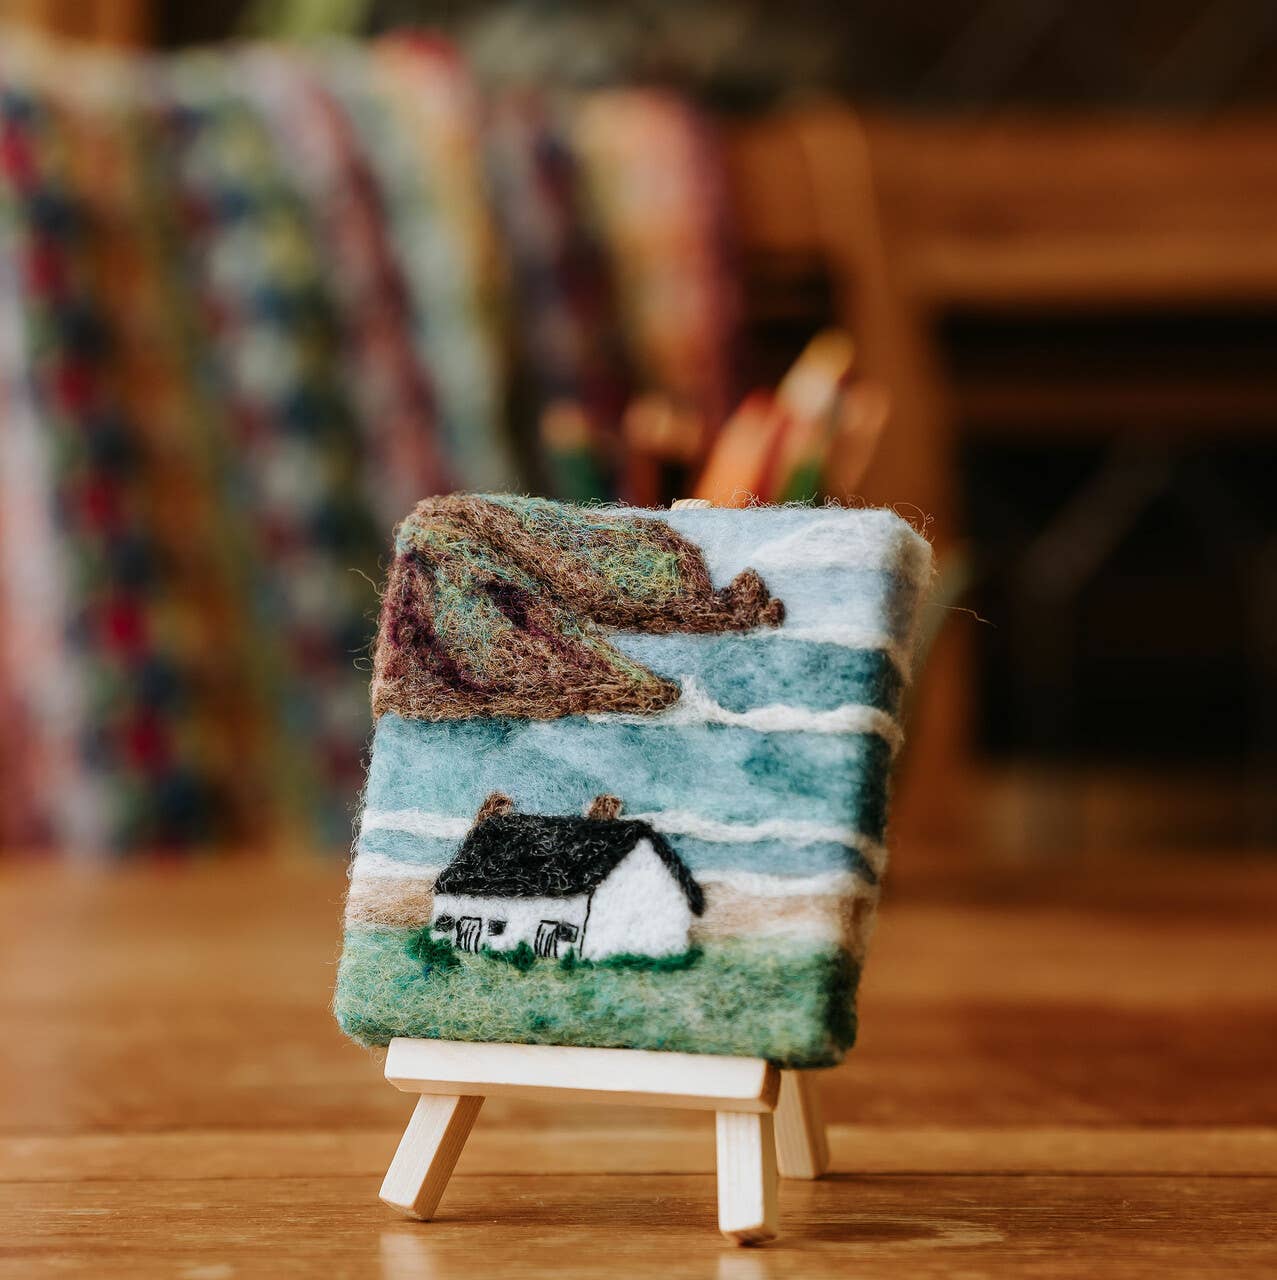 The Crafty Kit Company - Paint with Wool: Mini Masterpiece Seashore Bothy Craft Kit